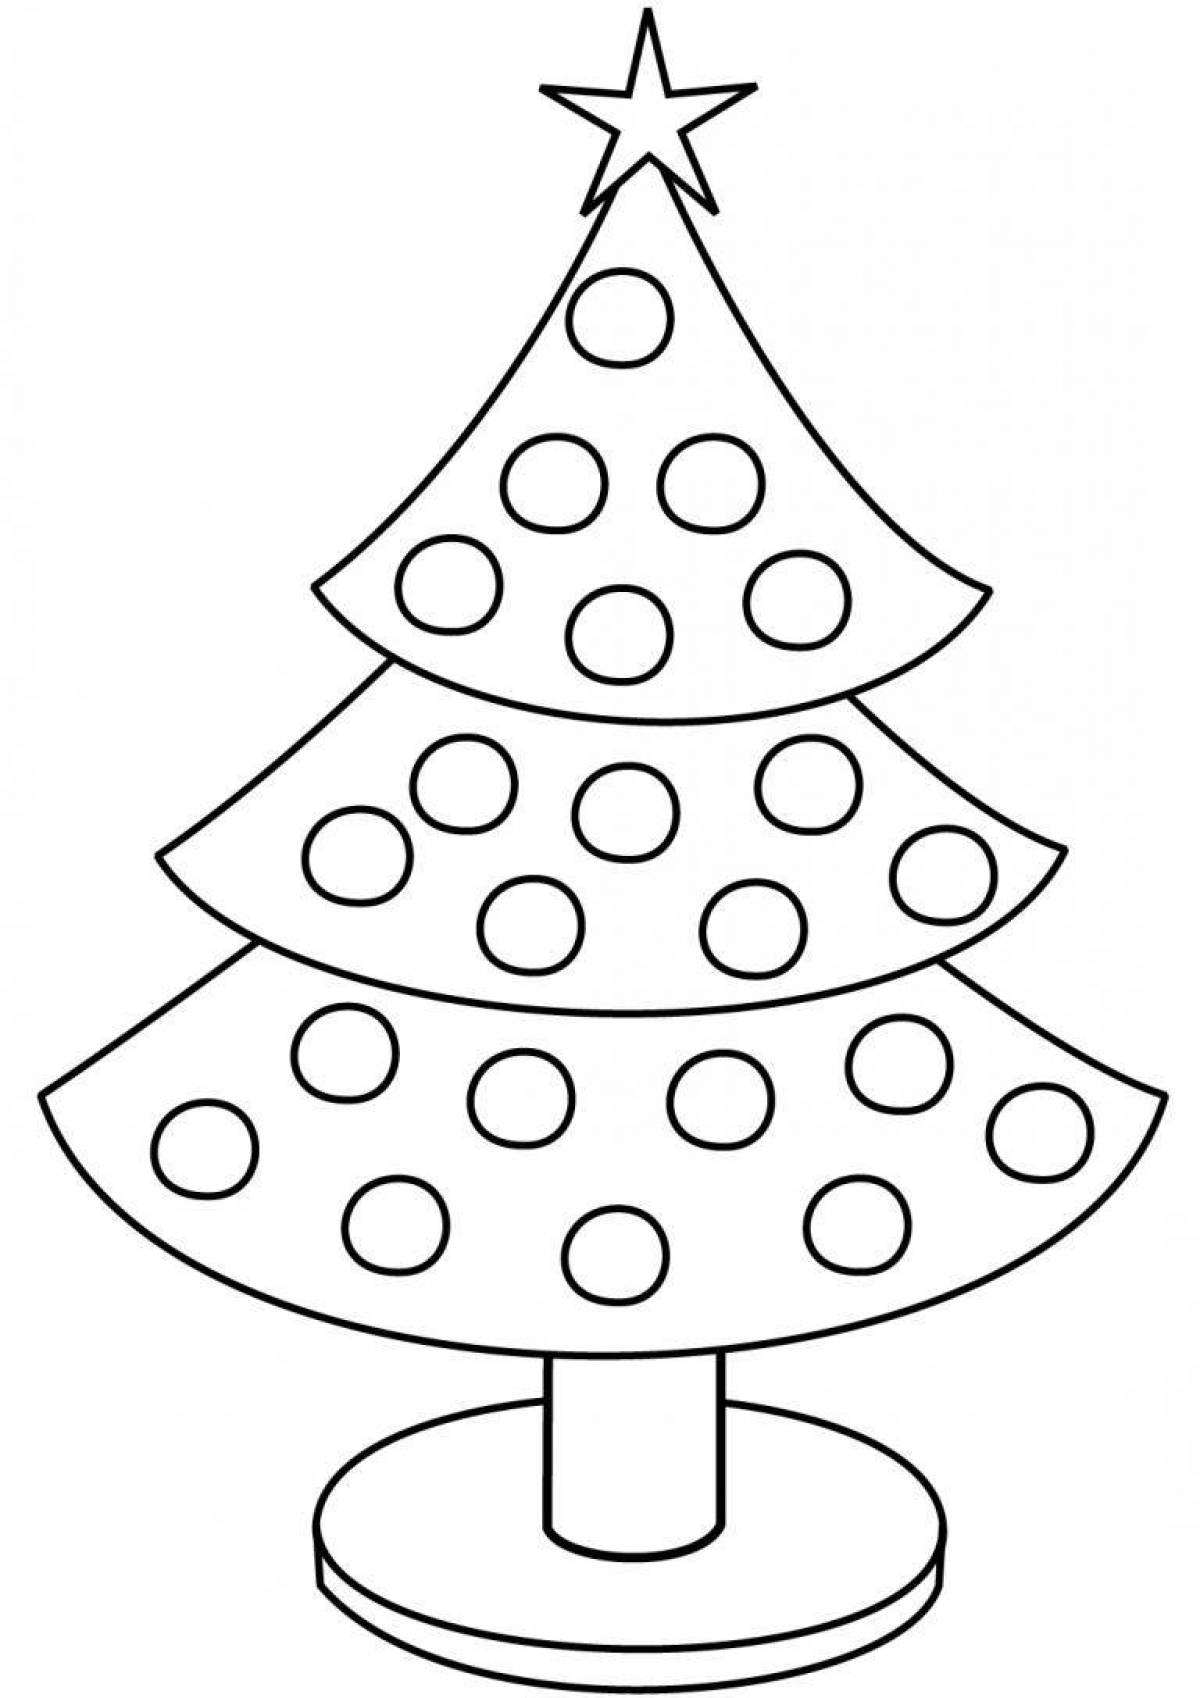 Large Christmas tree with balls